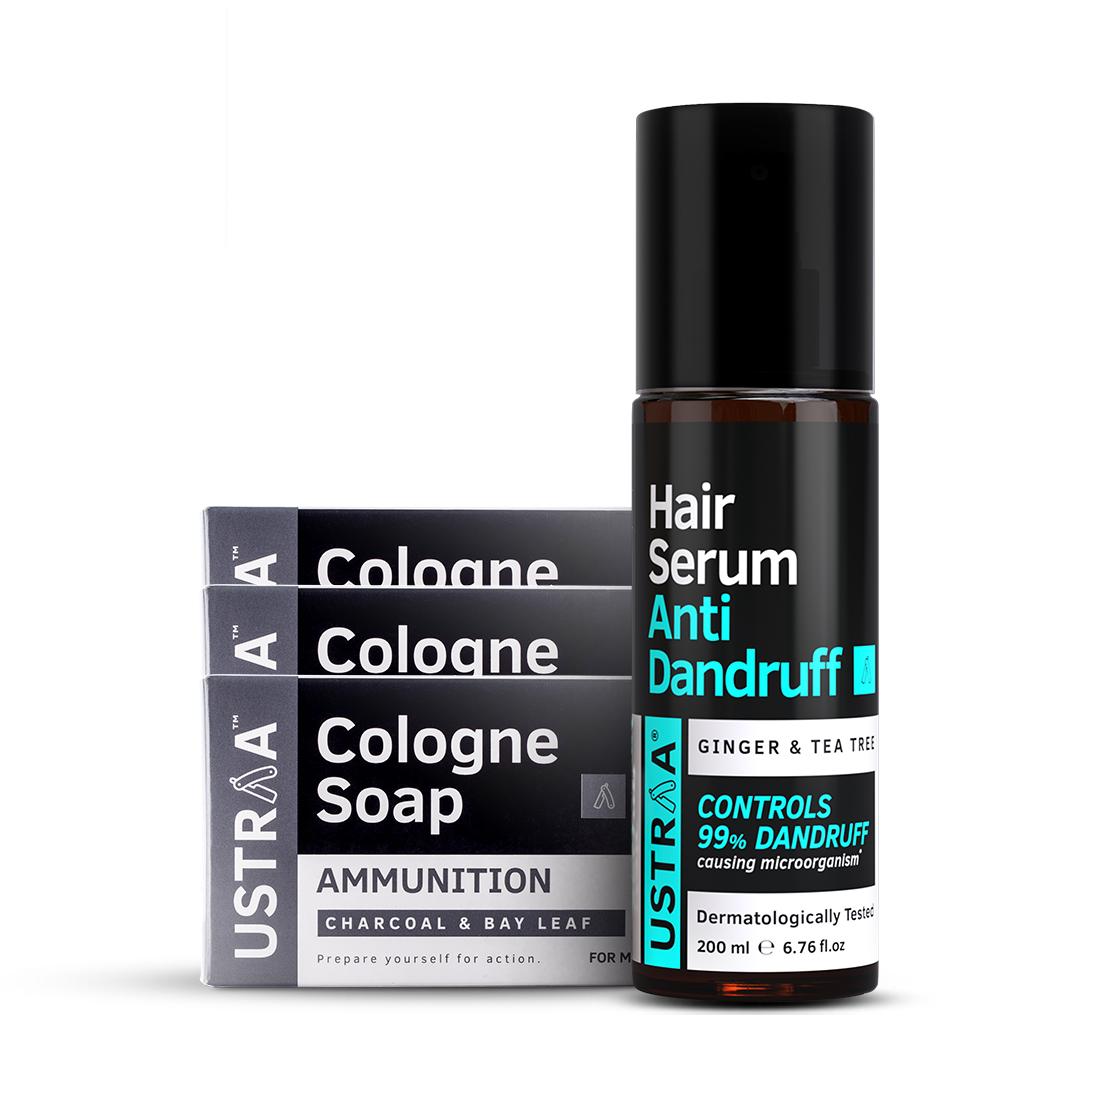 Anti Dandruff Serum & Cologne Soap Ammunition pack of 3